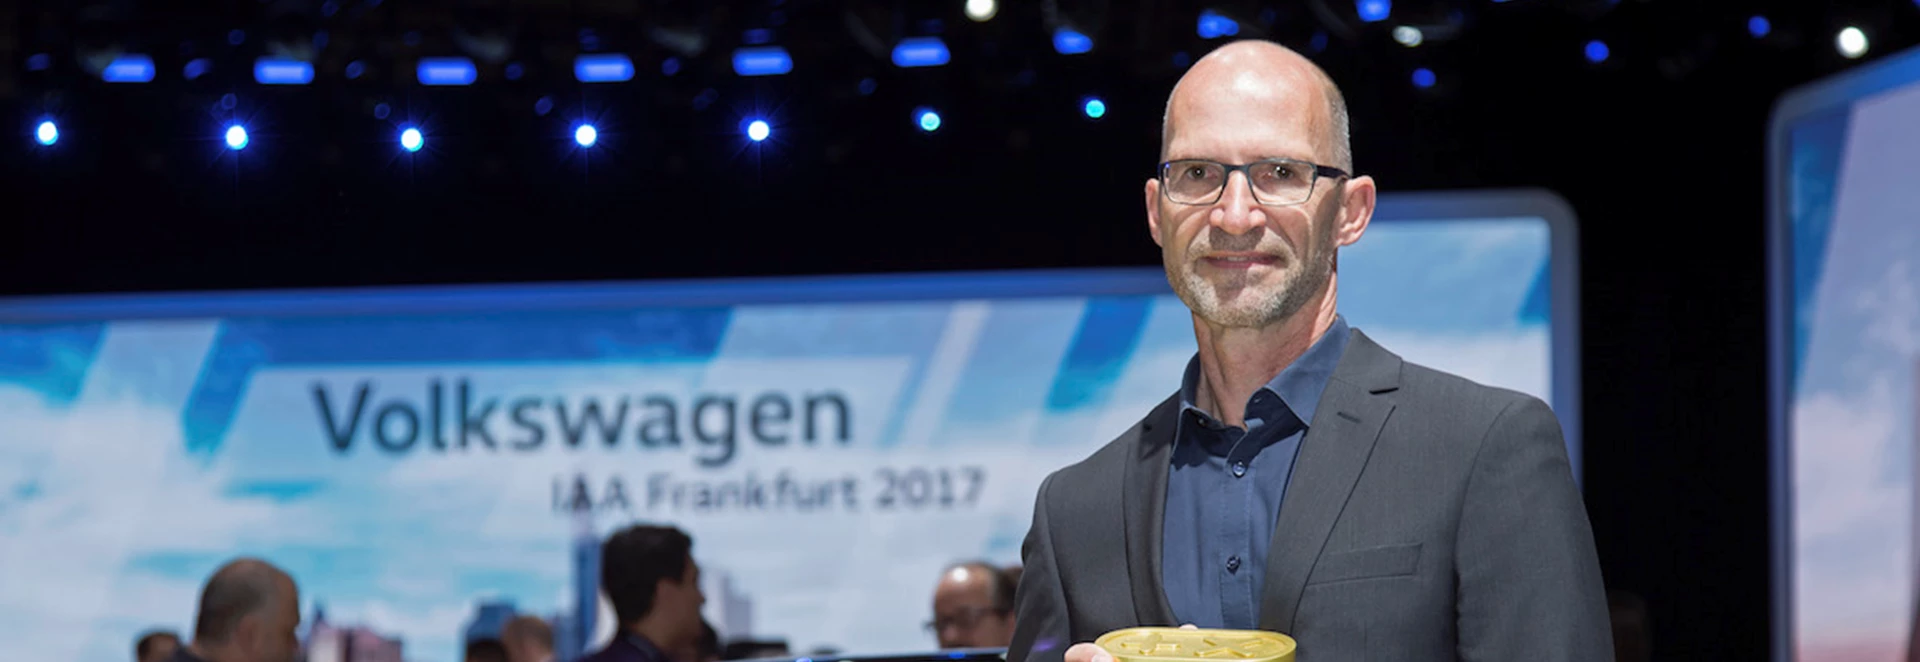 Volkswagen named ‘Most Innovative Brand’ at IAA 2017 